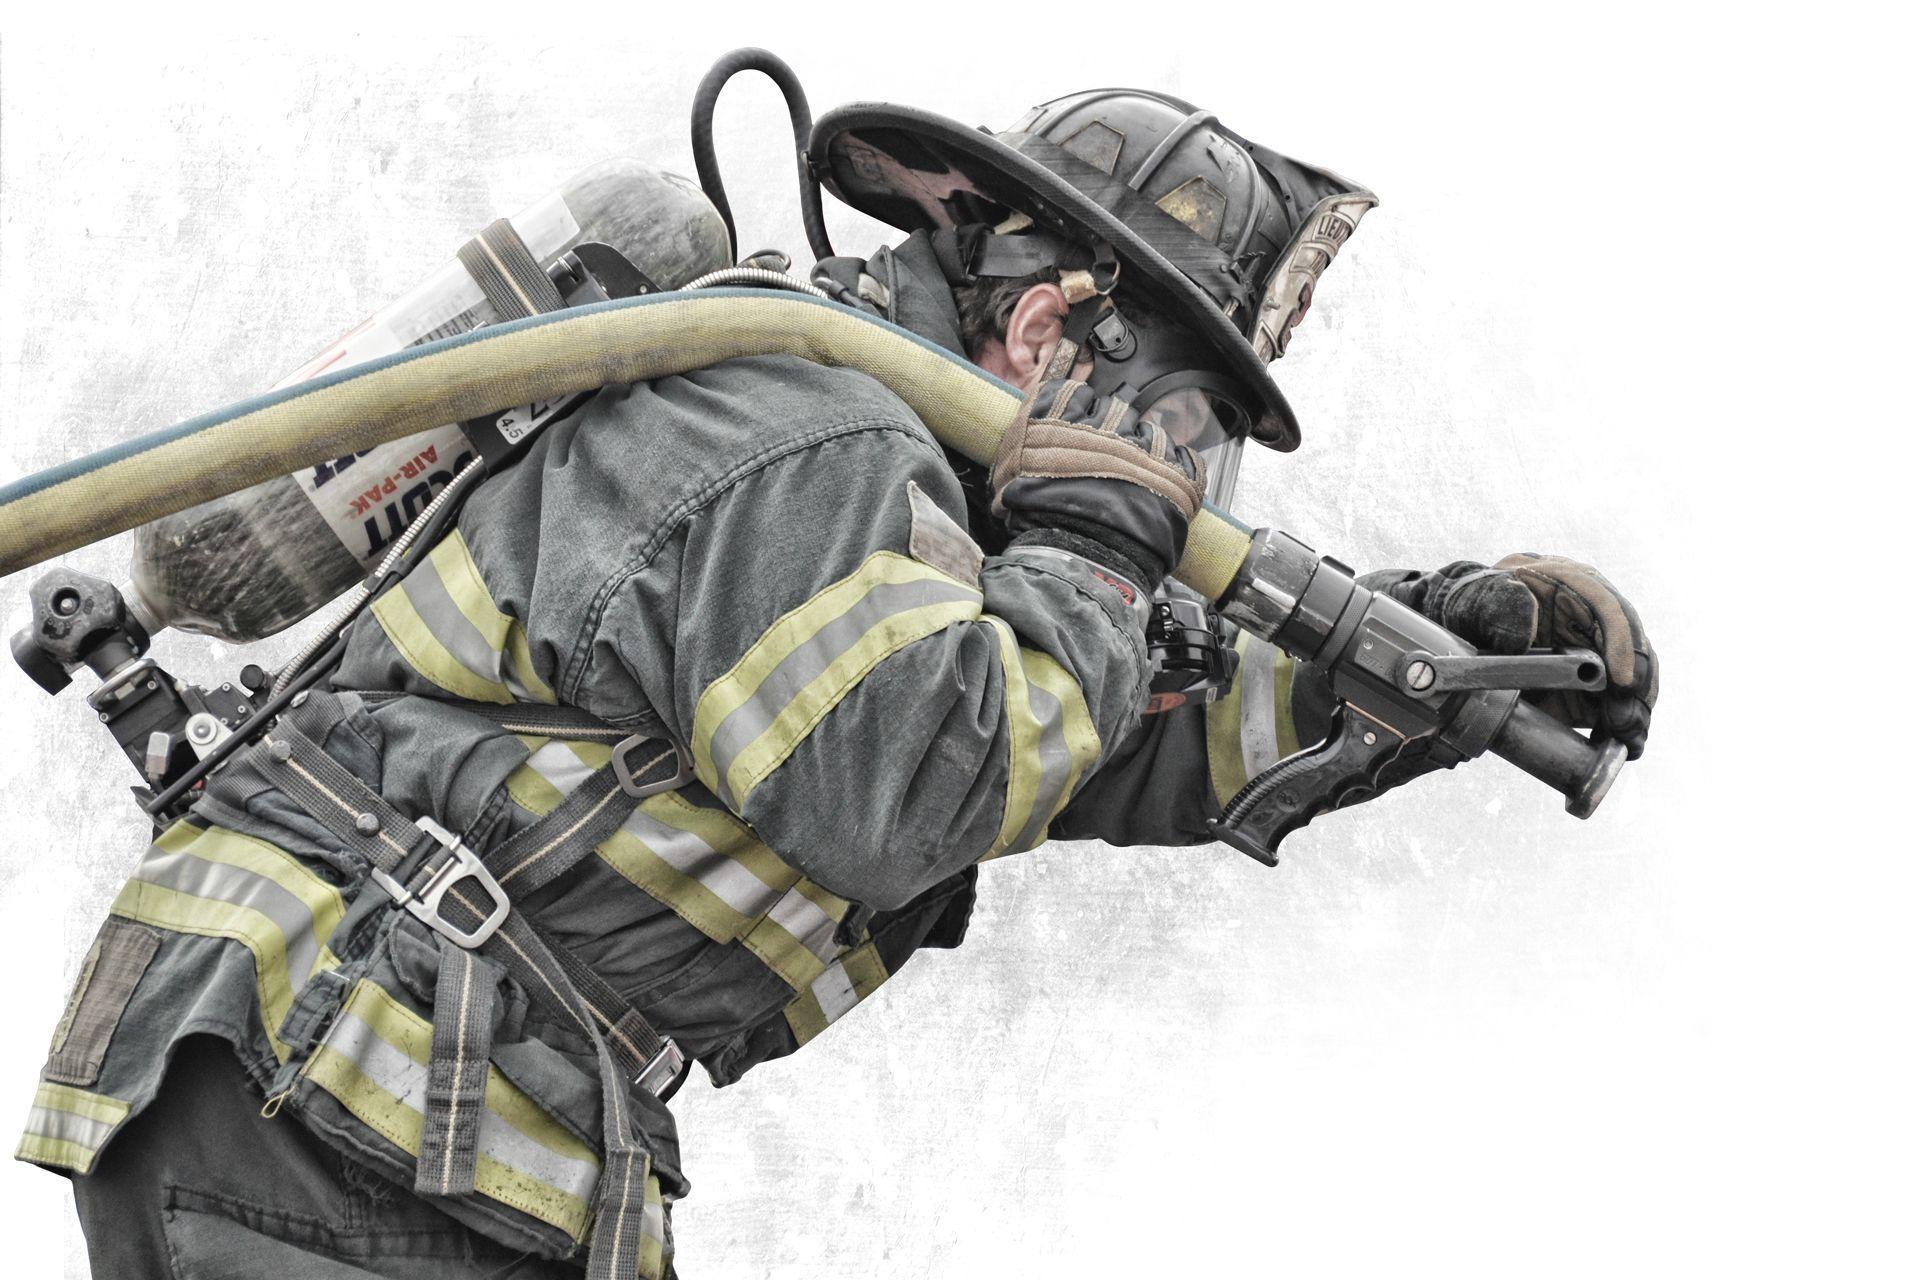 Best Firefighter Desktop Wallpaper in the world Don t miss out 